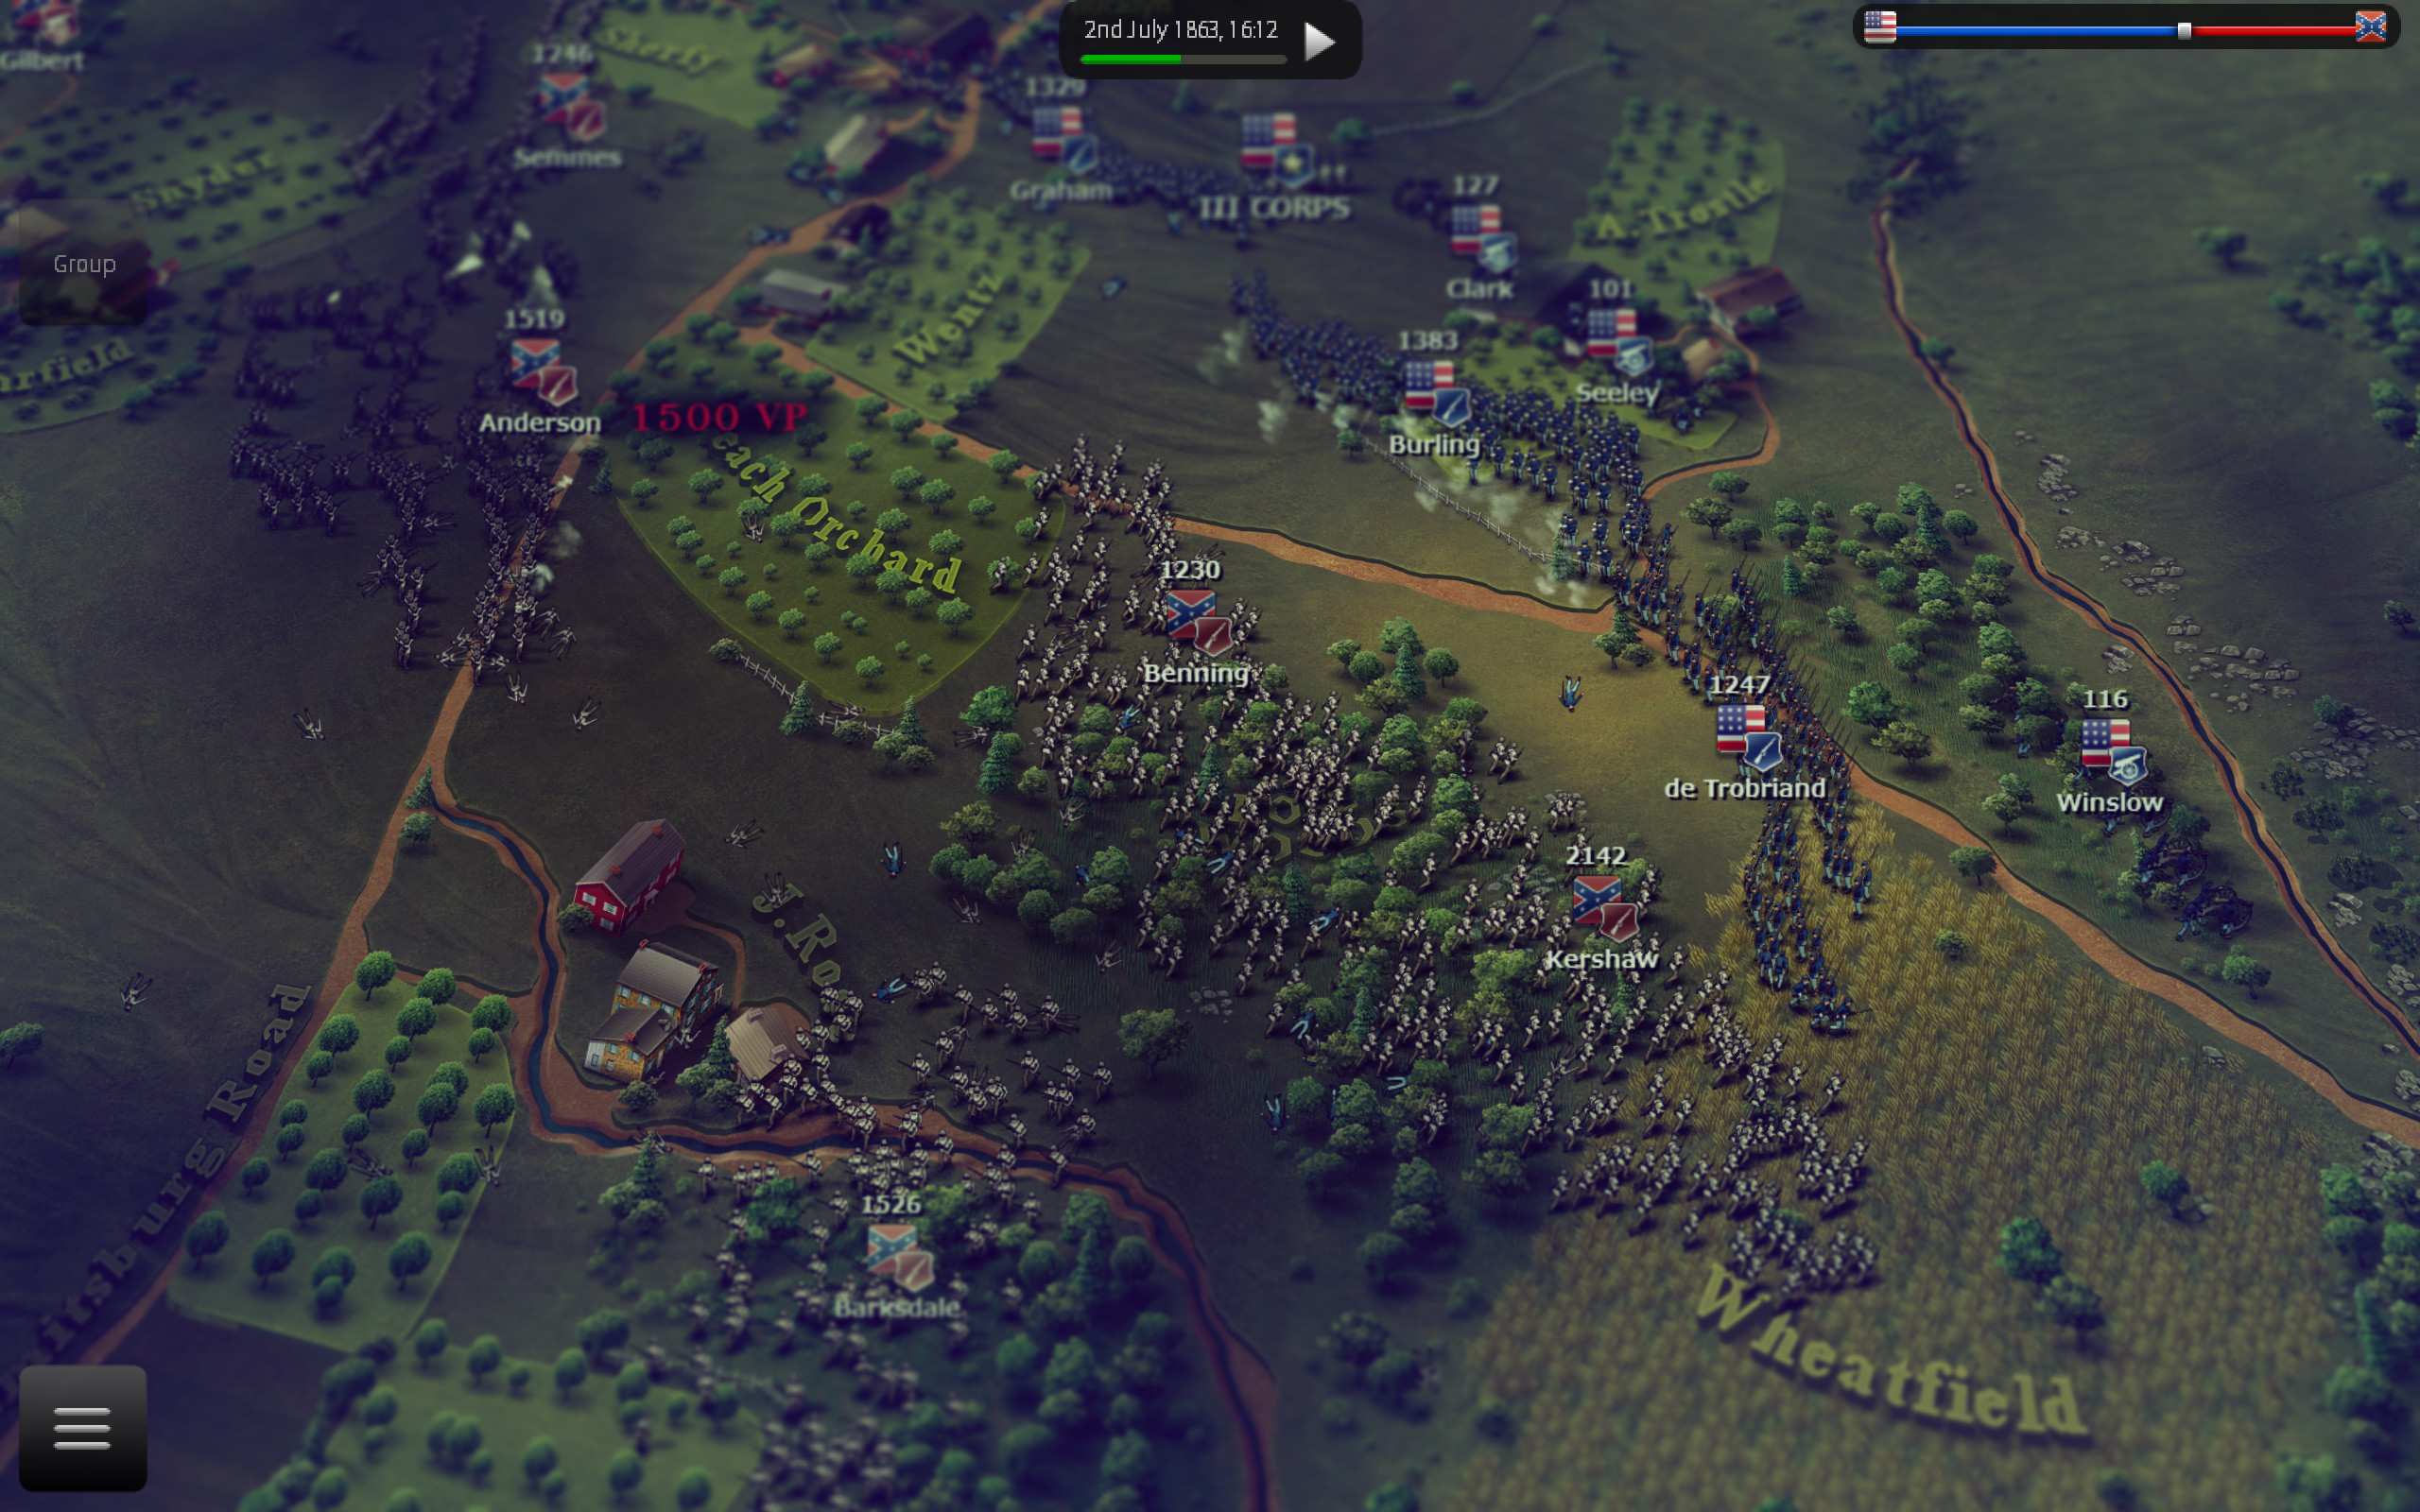 Ultimate General: Gettysburg screenshot